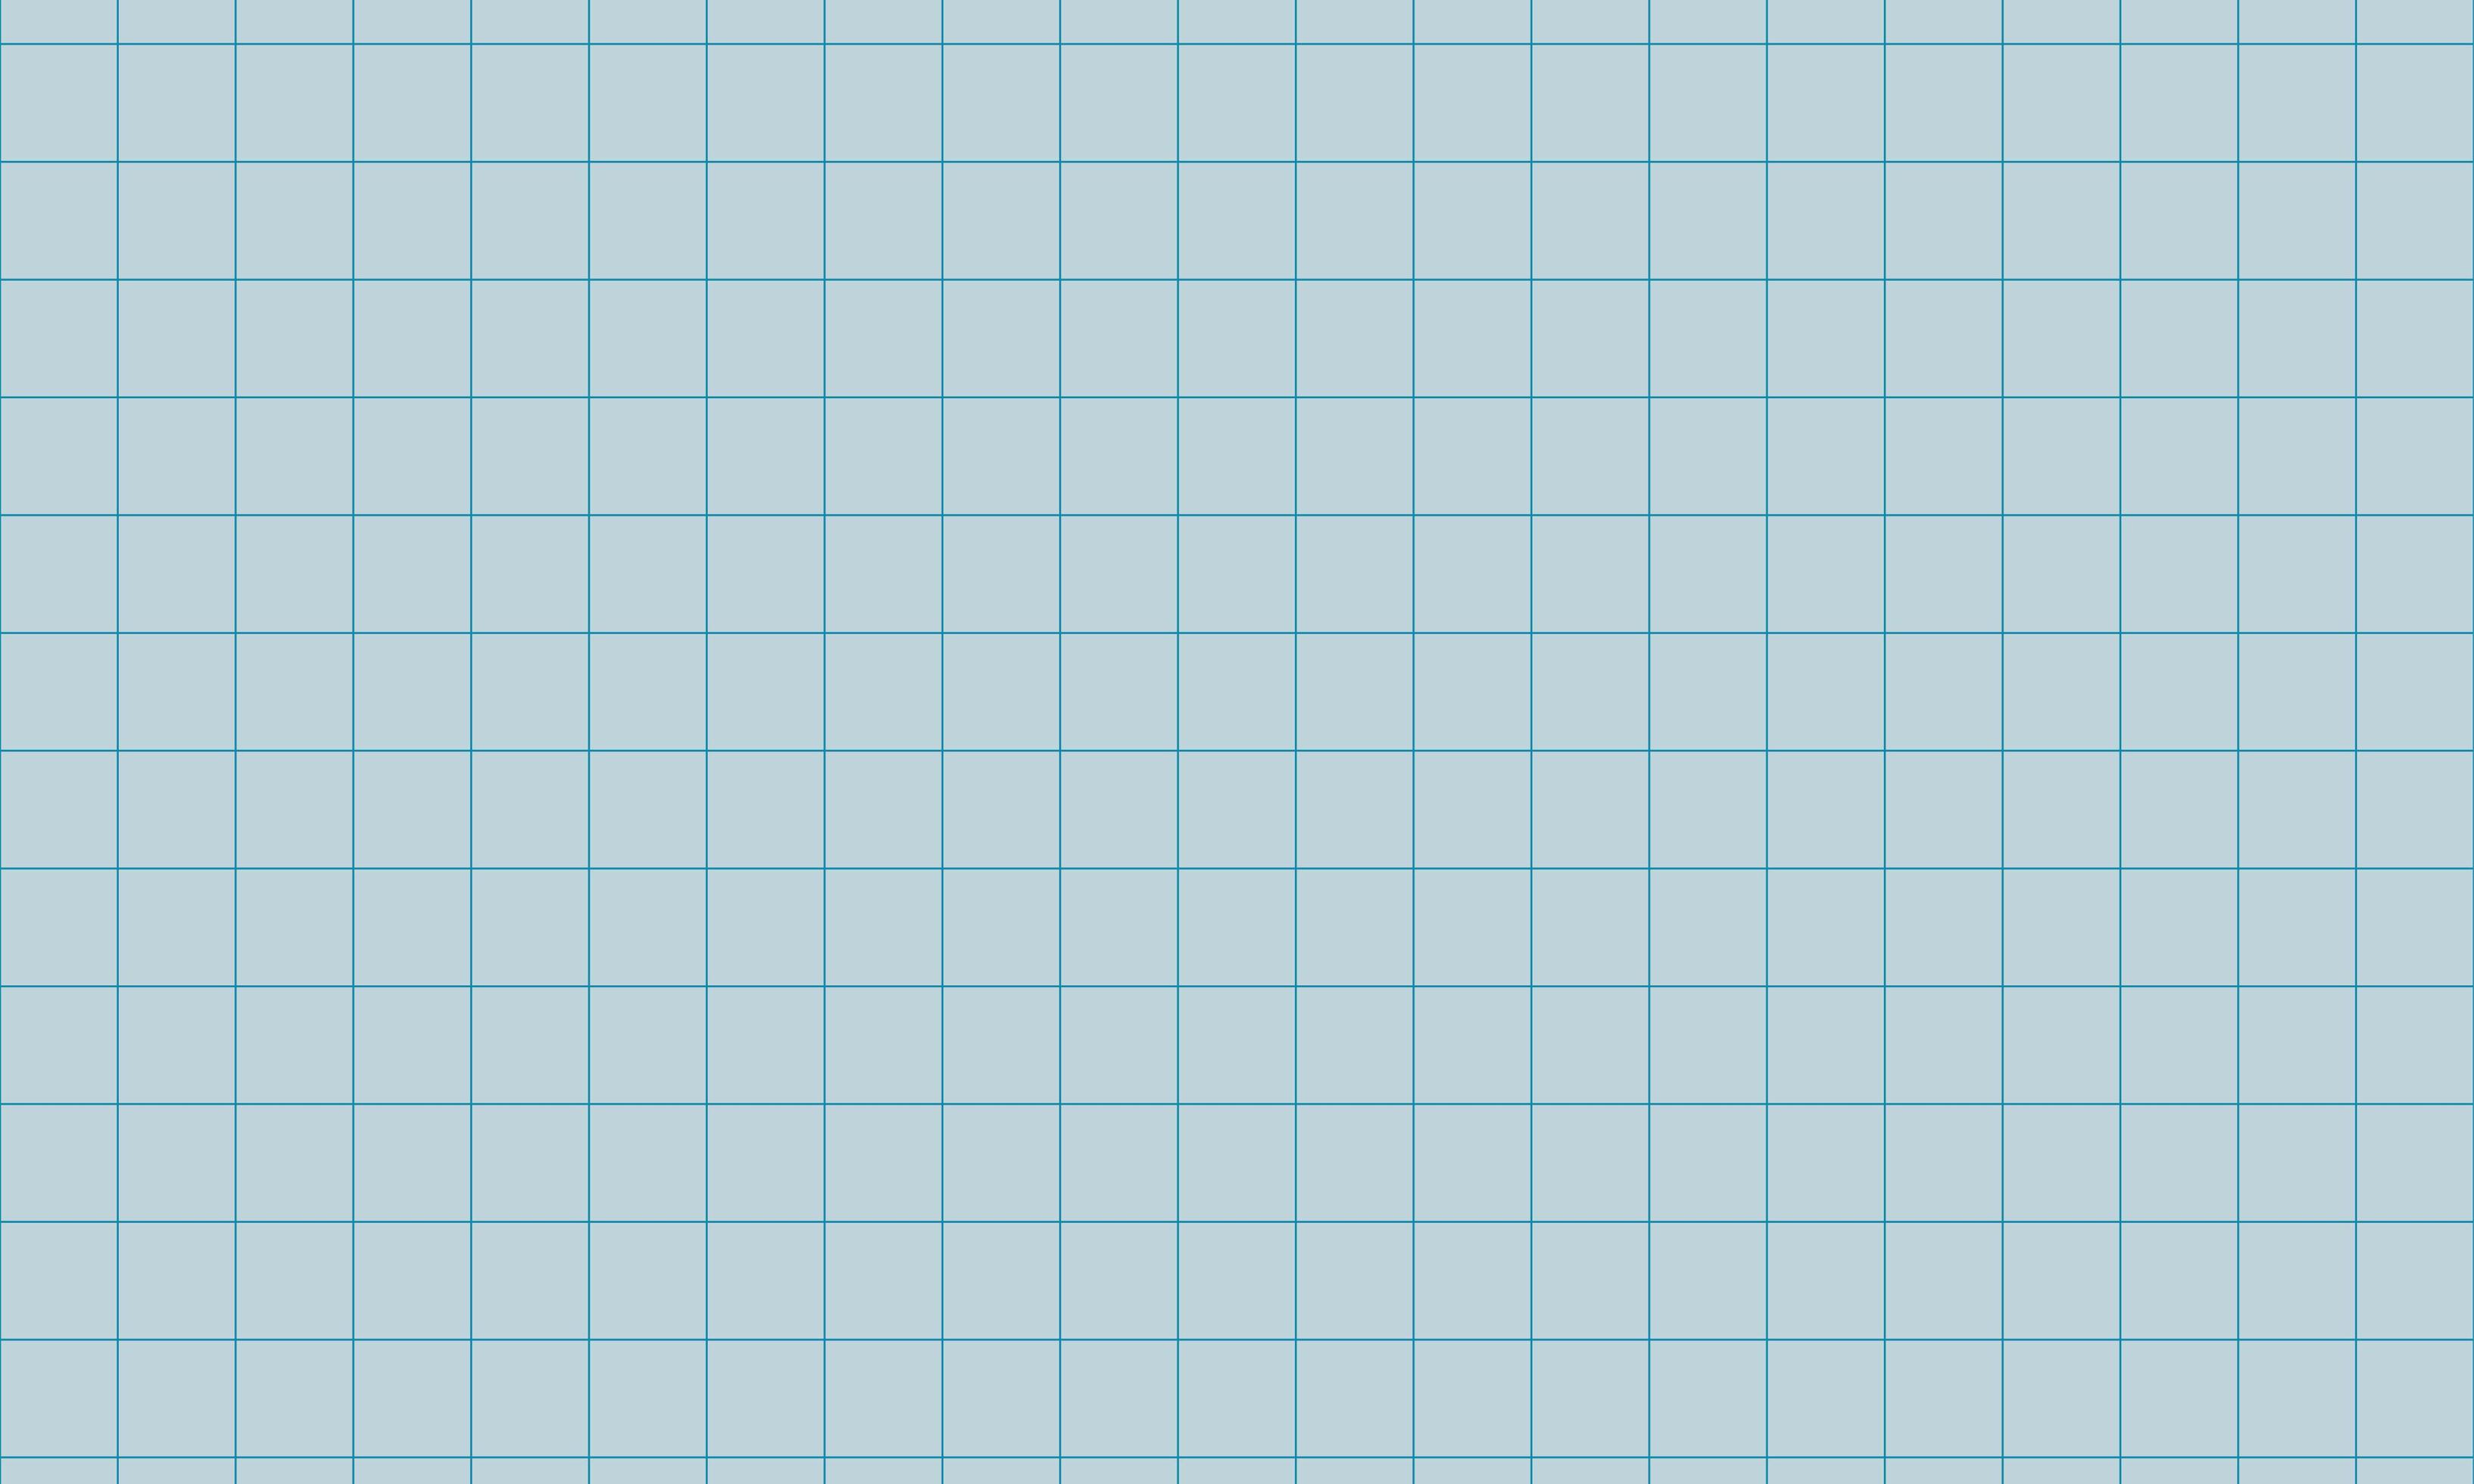 A blue grid on a light blue background - Pastel blue, blue